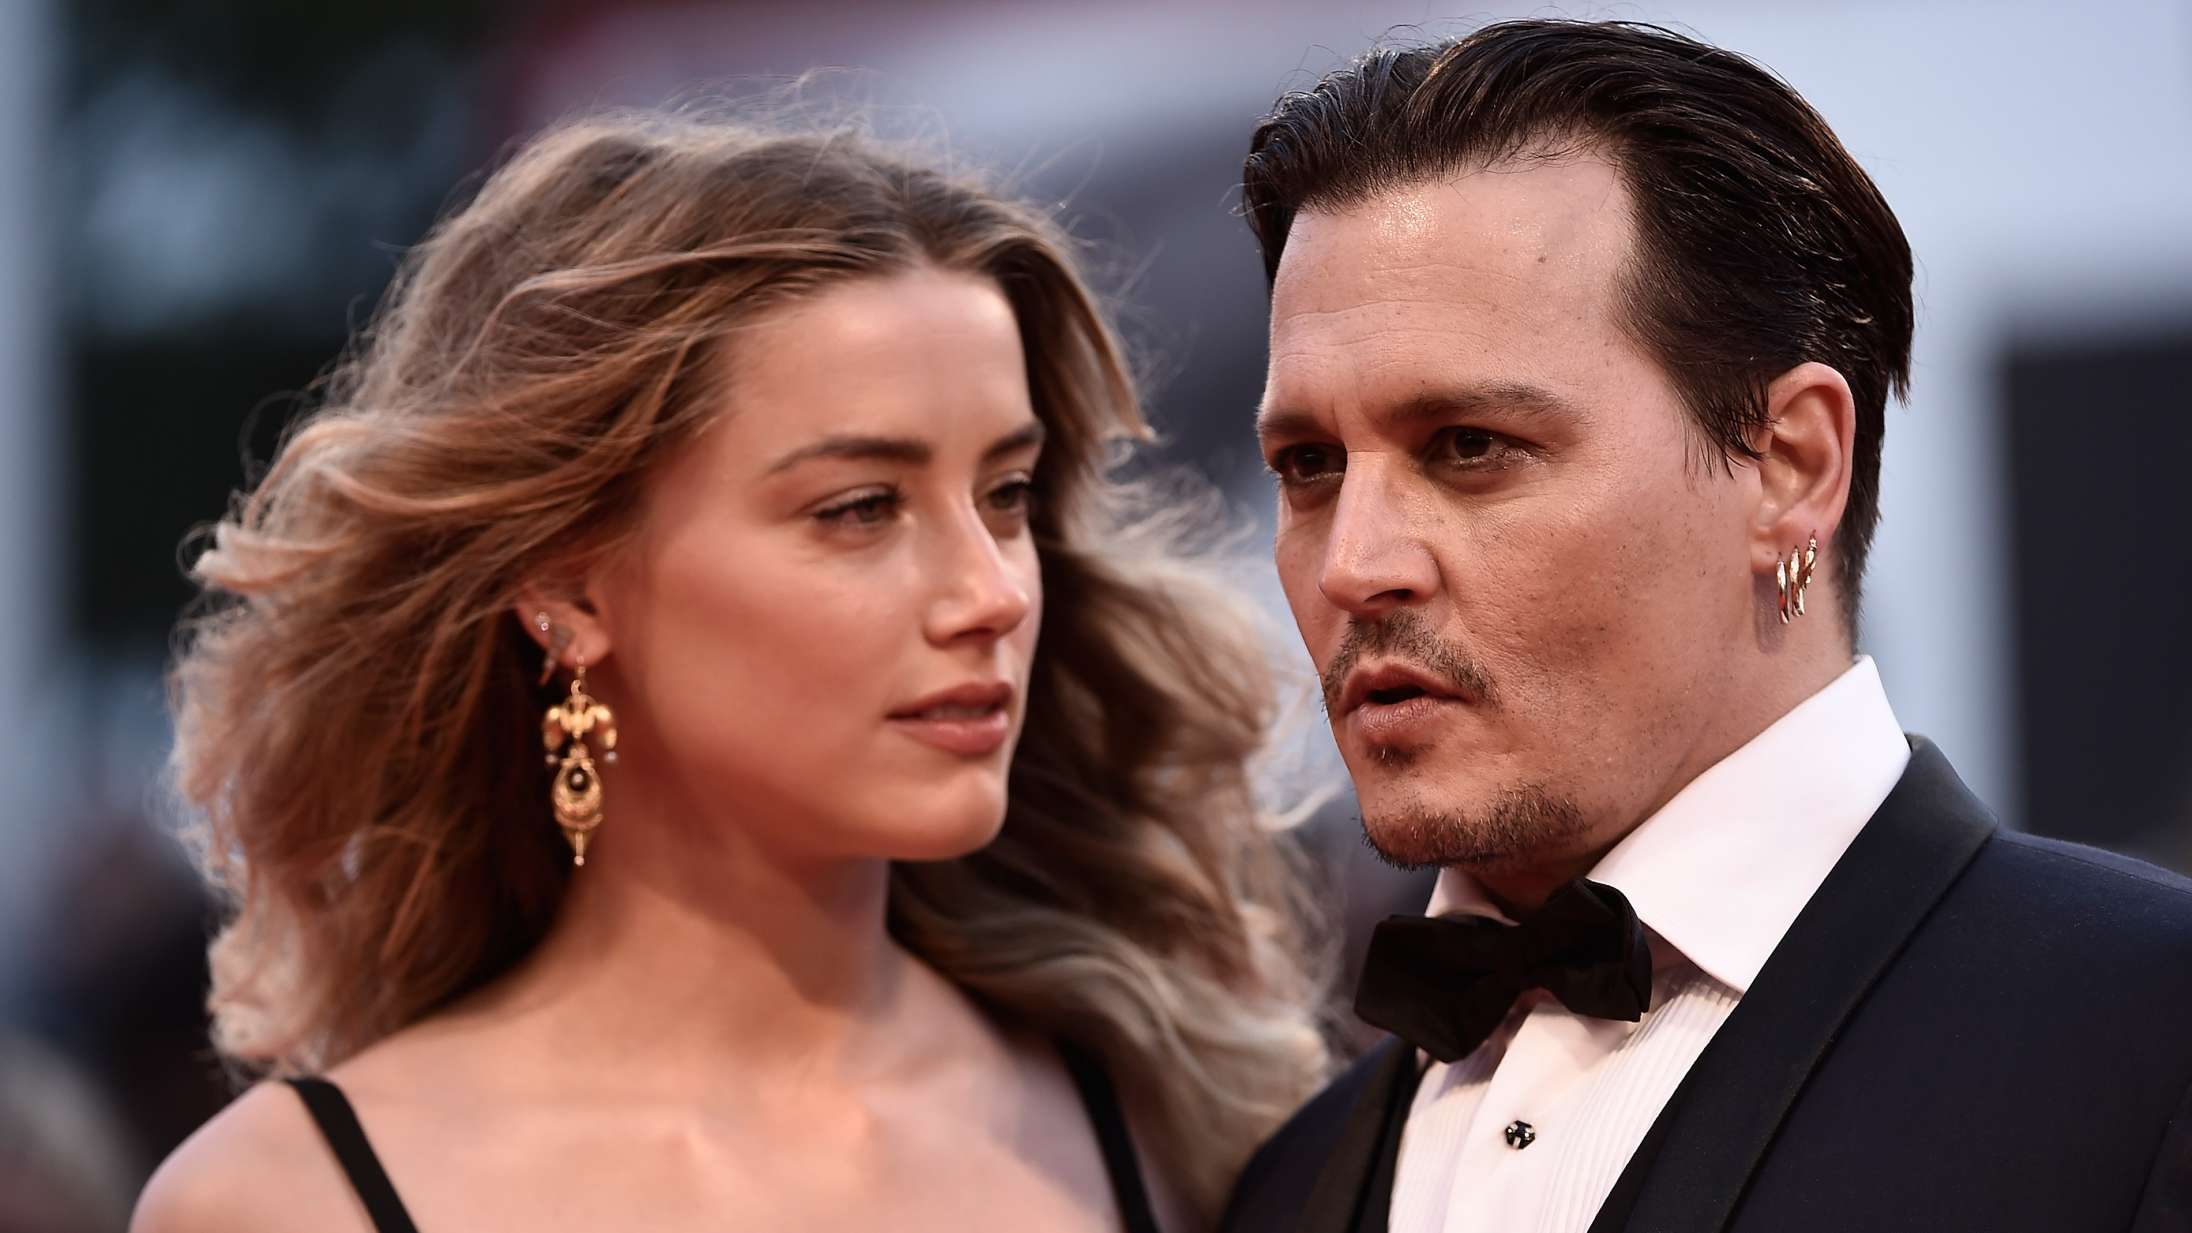 Amber Heard tabte sagen mod Johnny Depp, da den indtog TikTok